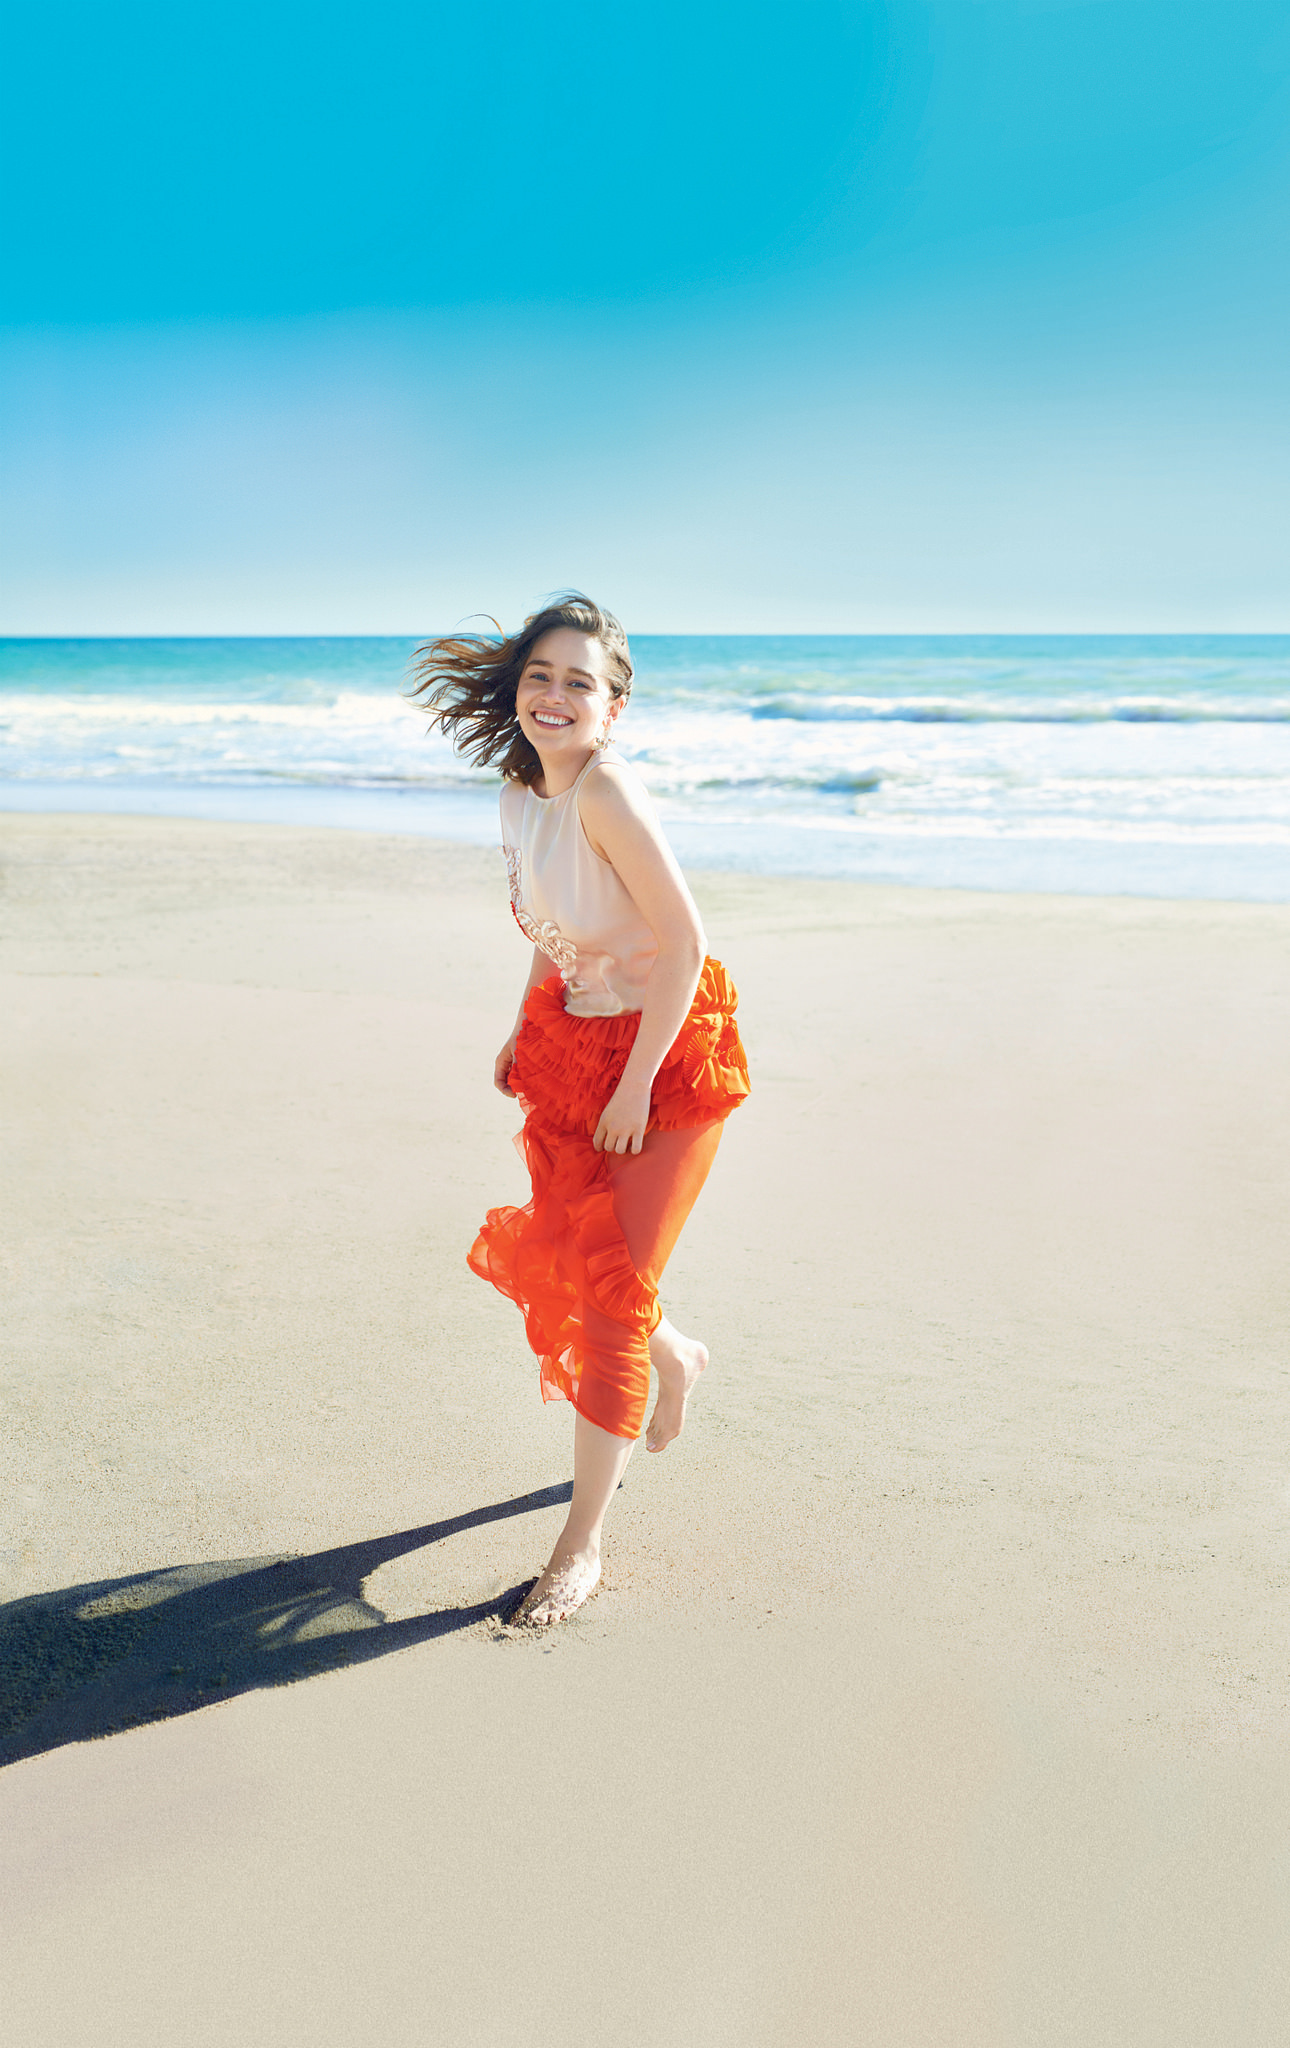 Фото Актриса Emilia Clarke / Эмилия Кларк, известная по роли Dayeneris Targaryen / Дайенерис Таргариен гуляет по пляжу, на берегу моря